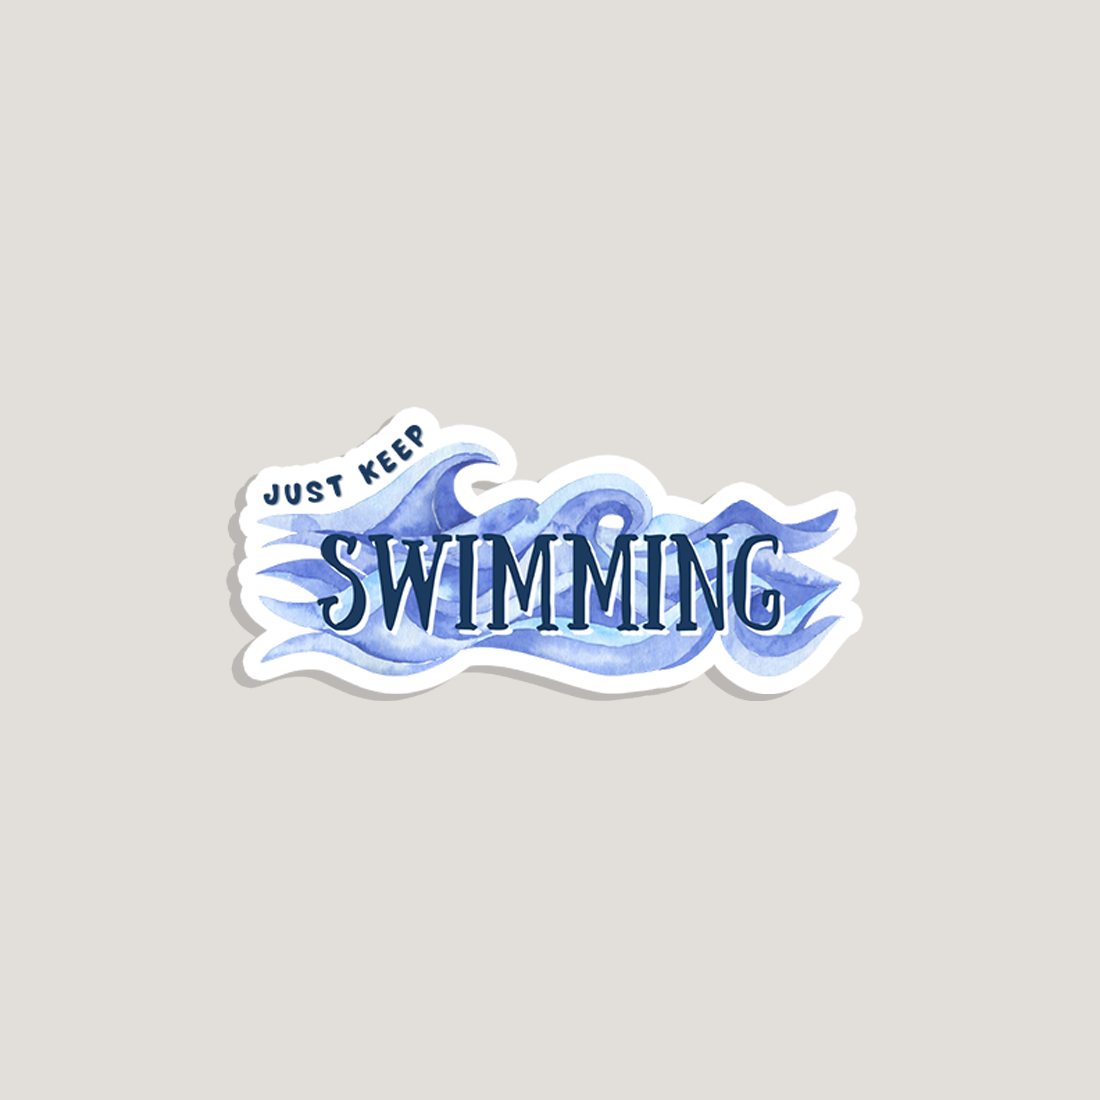 just keep swimming sticker